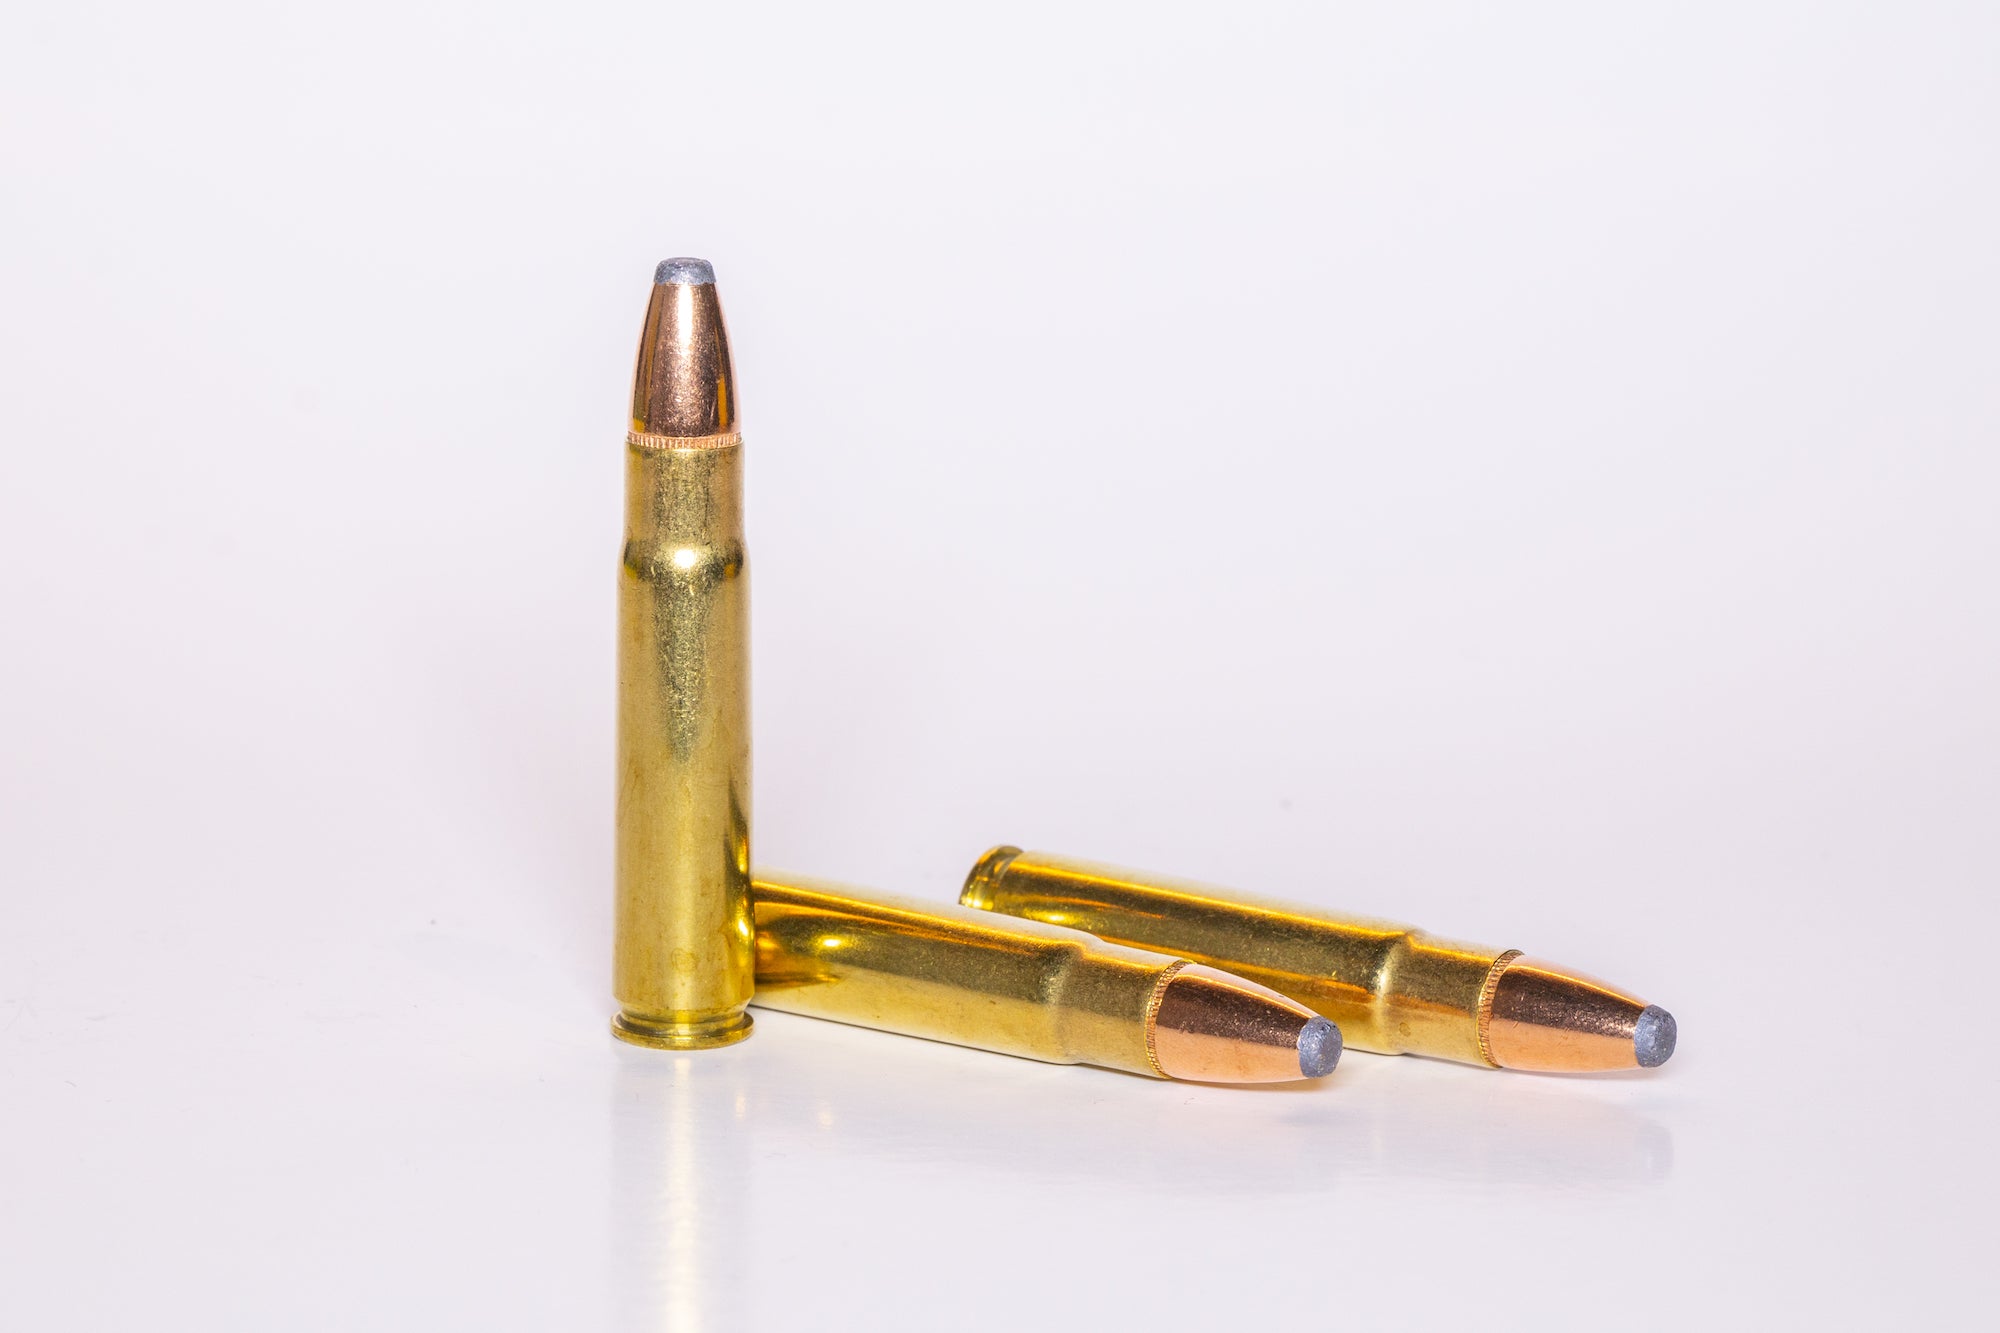 Rifle cartridge on a white background.